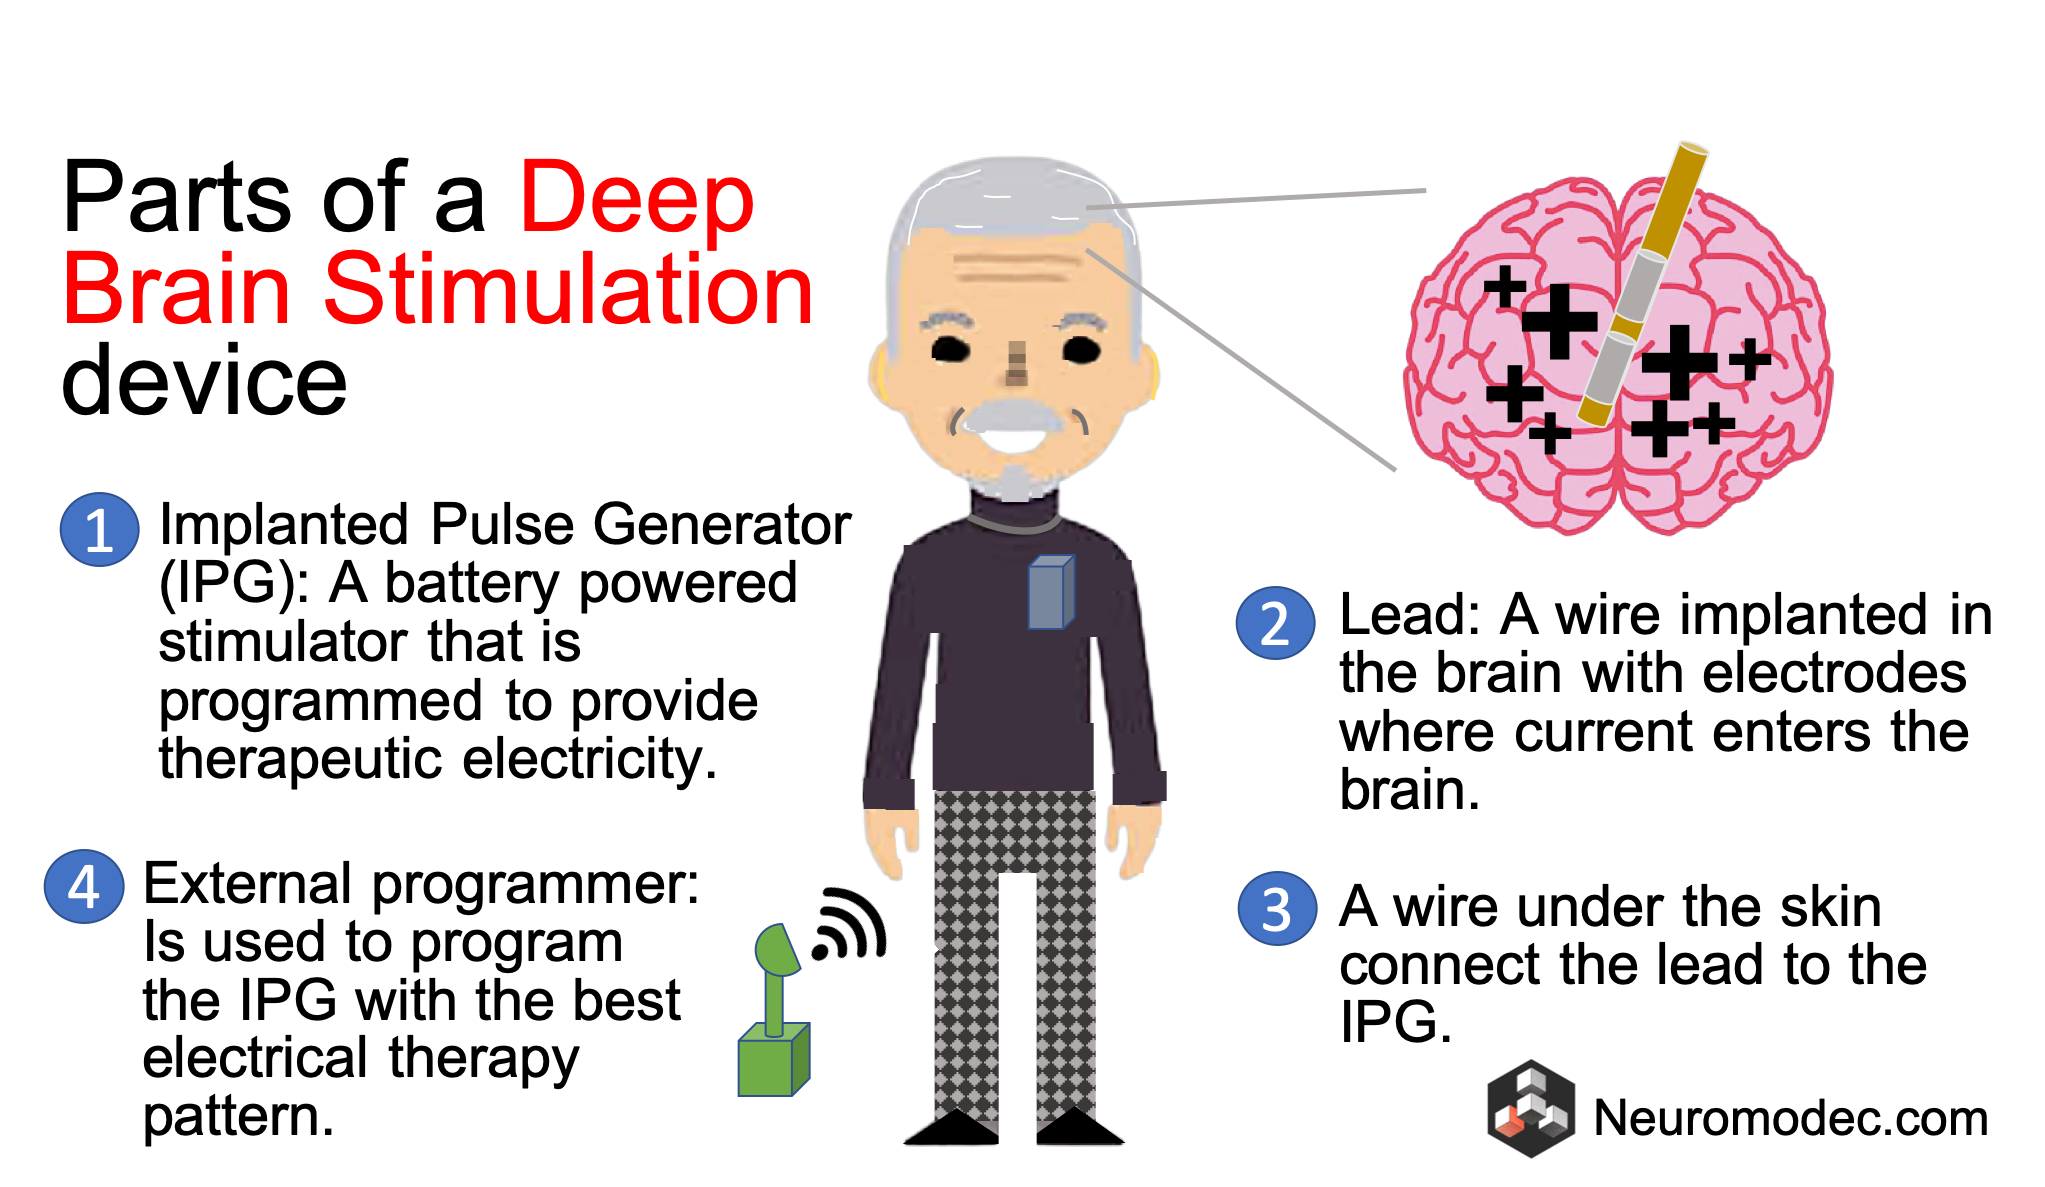 Parts of a Deep Brain Stimulation Device